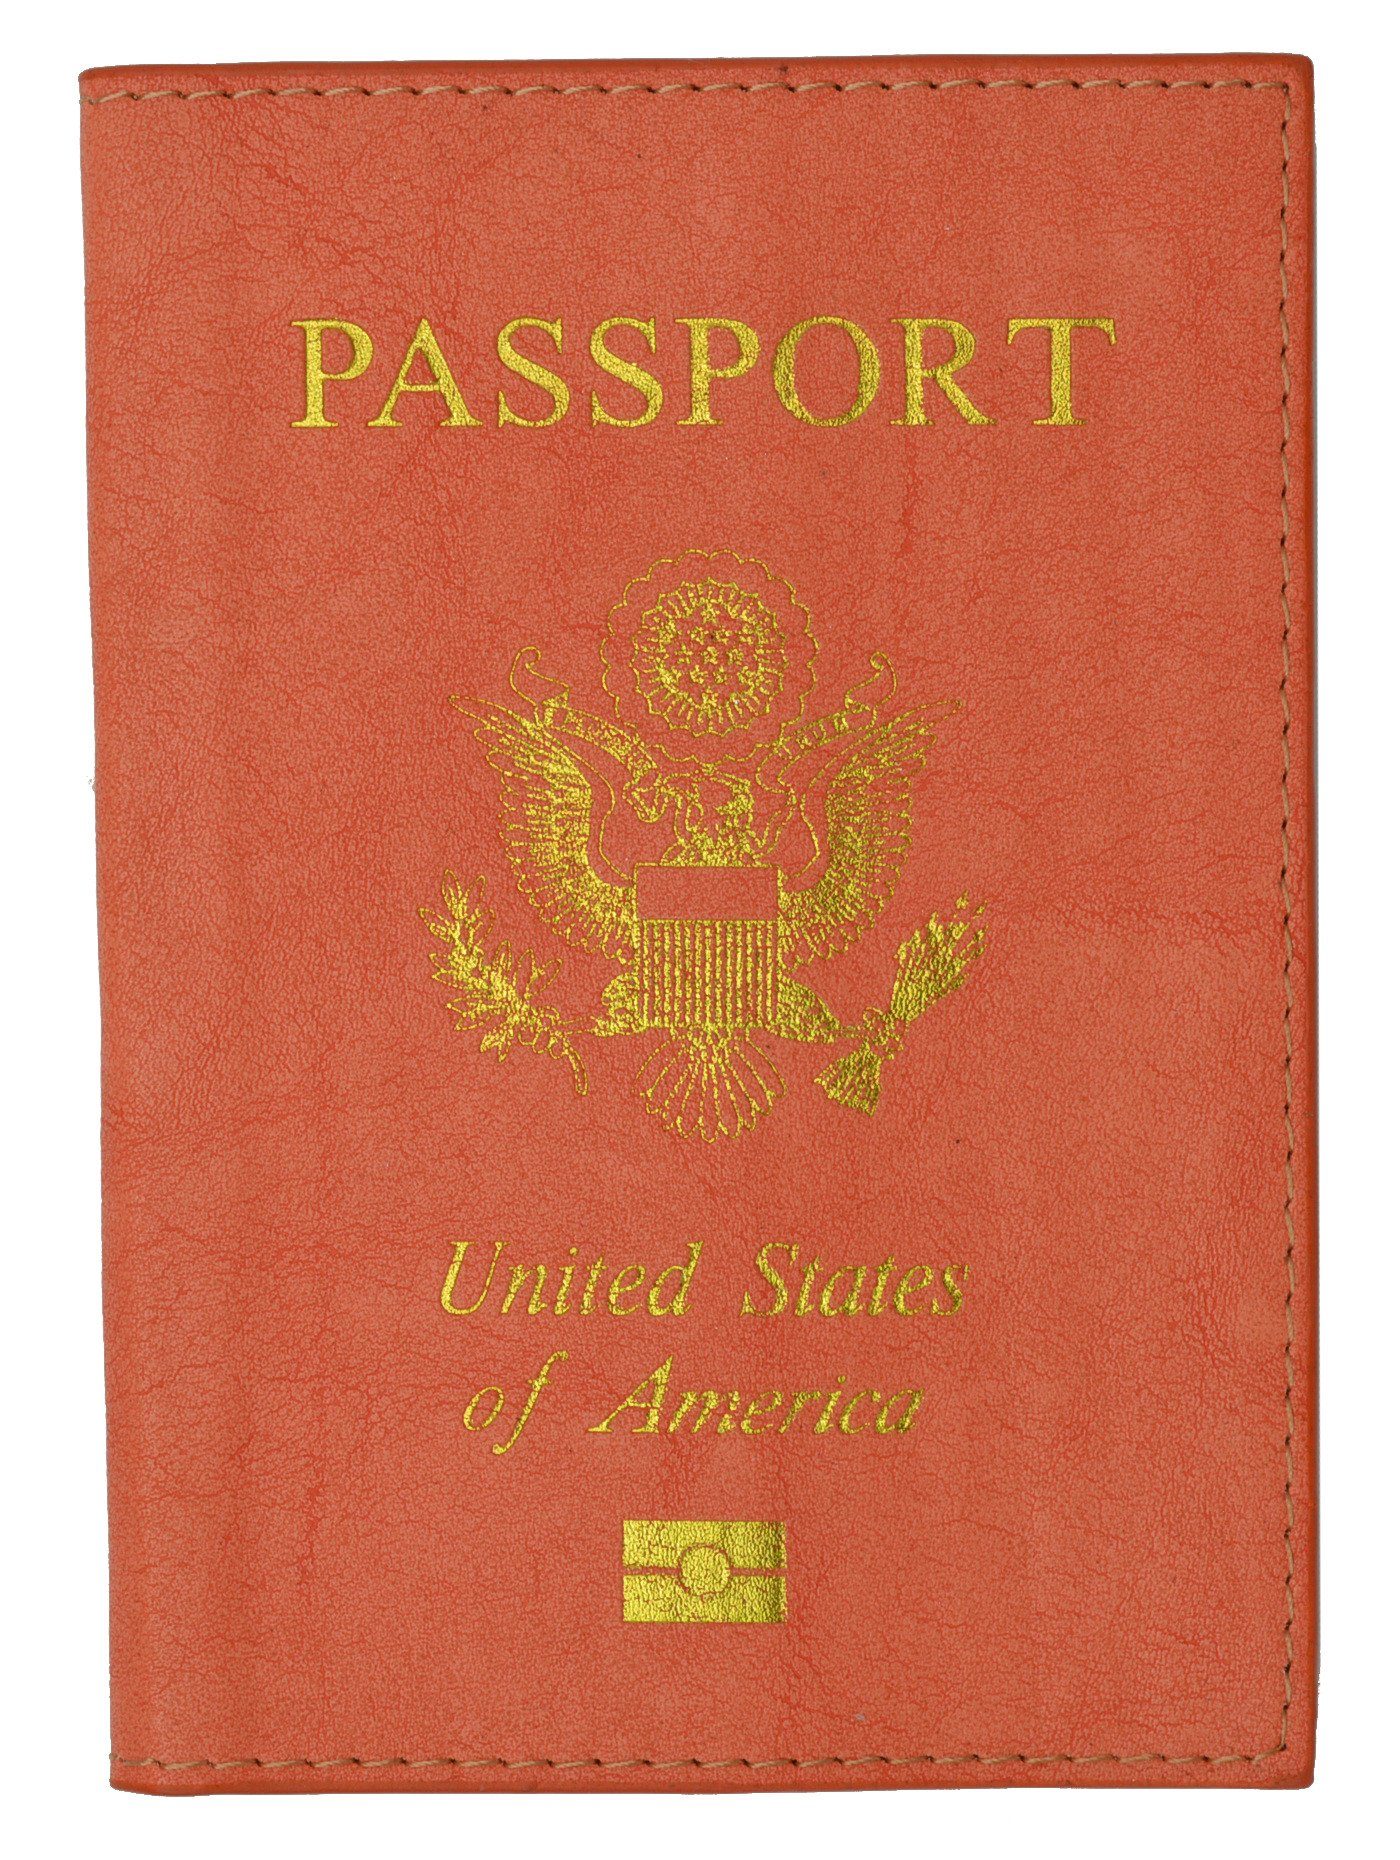 Leather USA Logo Passport Holder - Purple